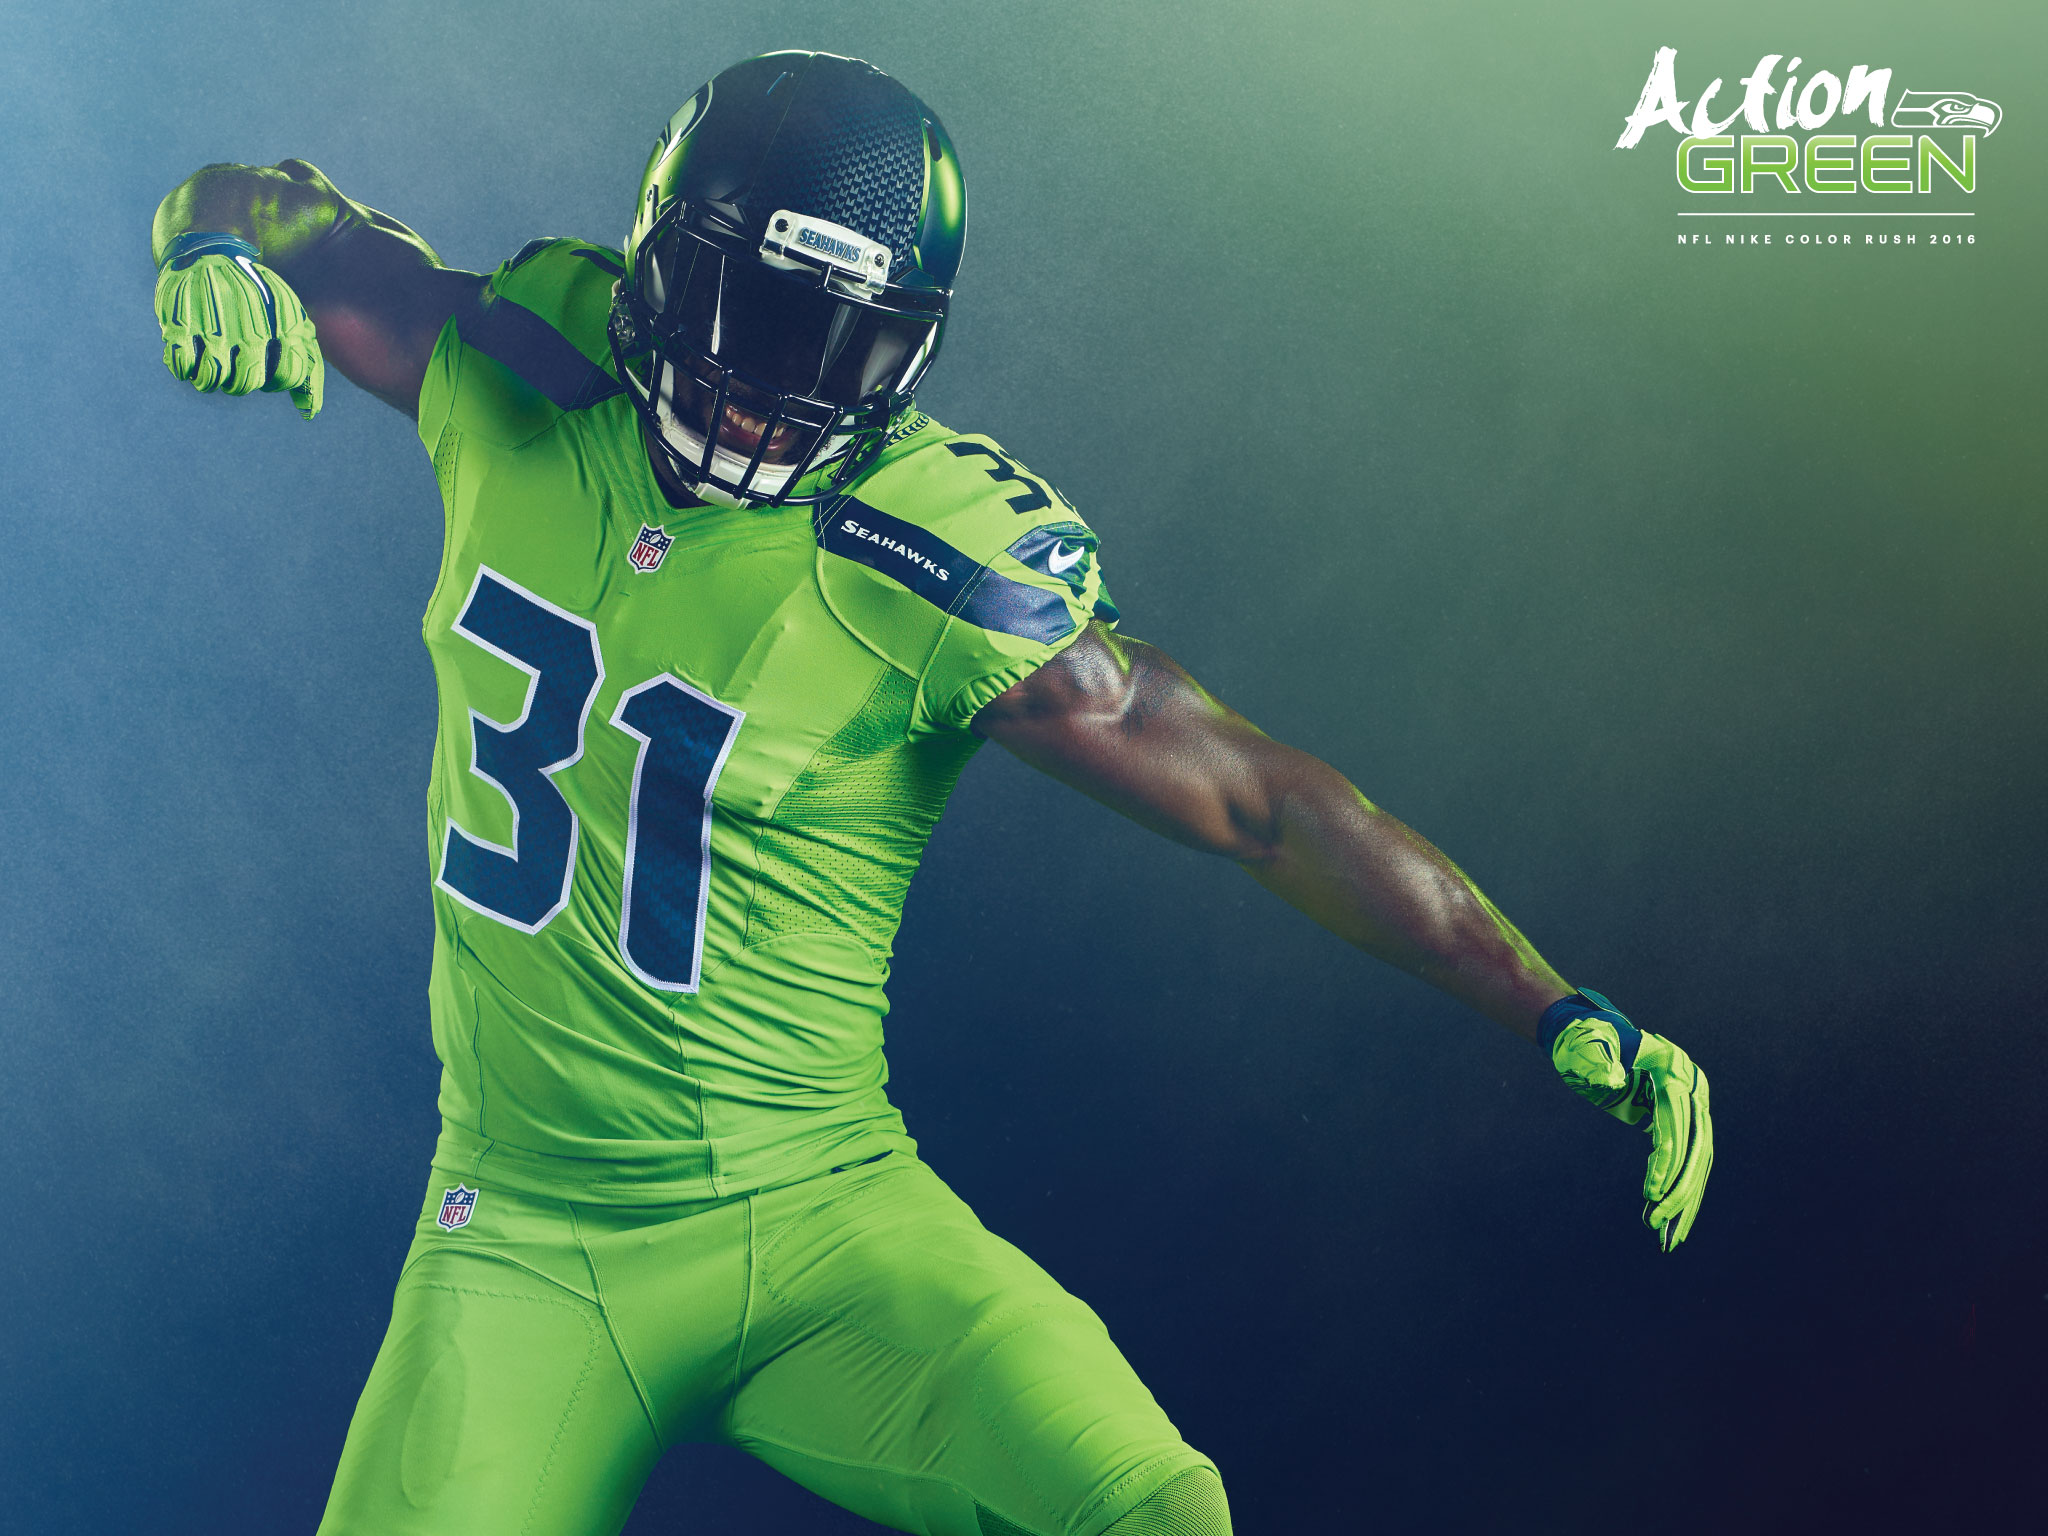 seahawks 바탕 화면,초록,스포츠,저지,플레이어,운동복